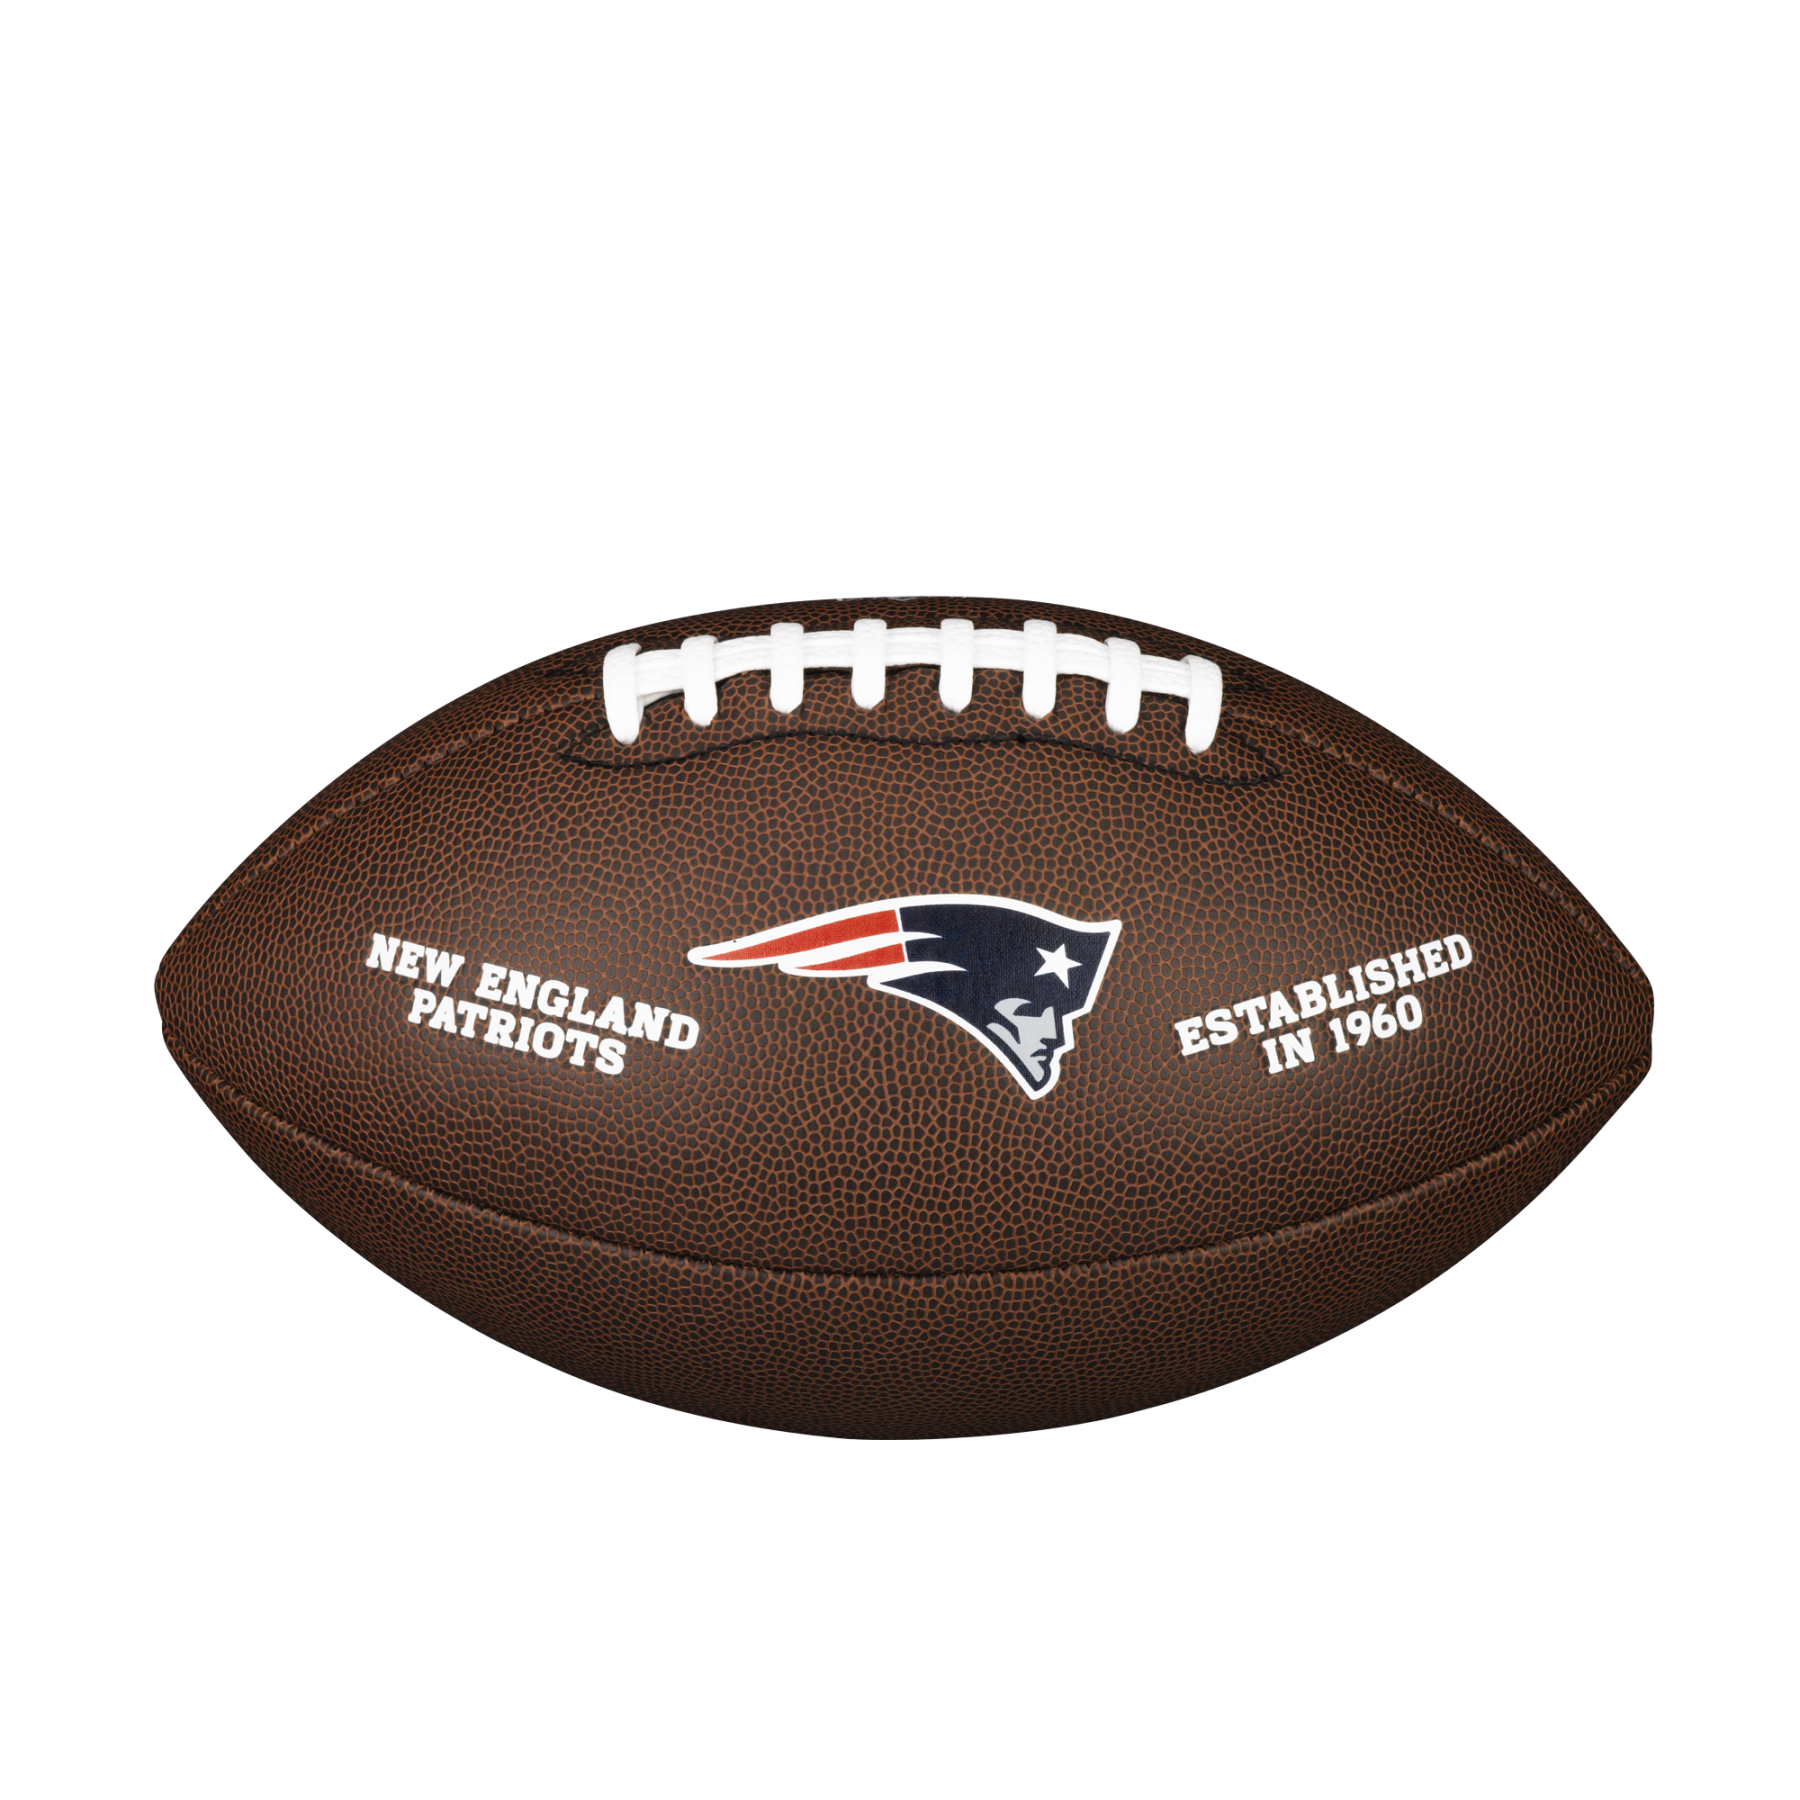 American Football Ball Wilson Patriots NFL Licensed